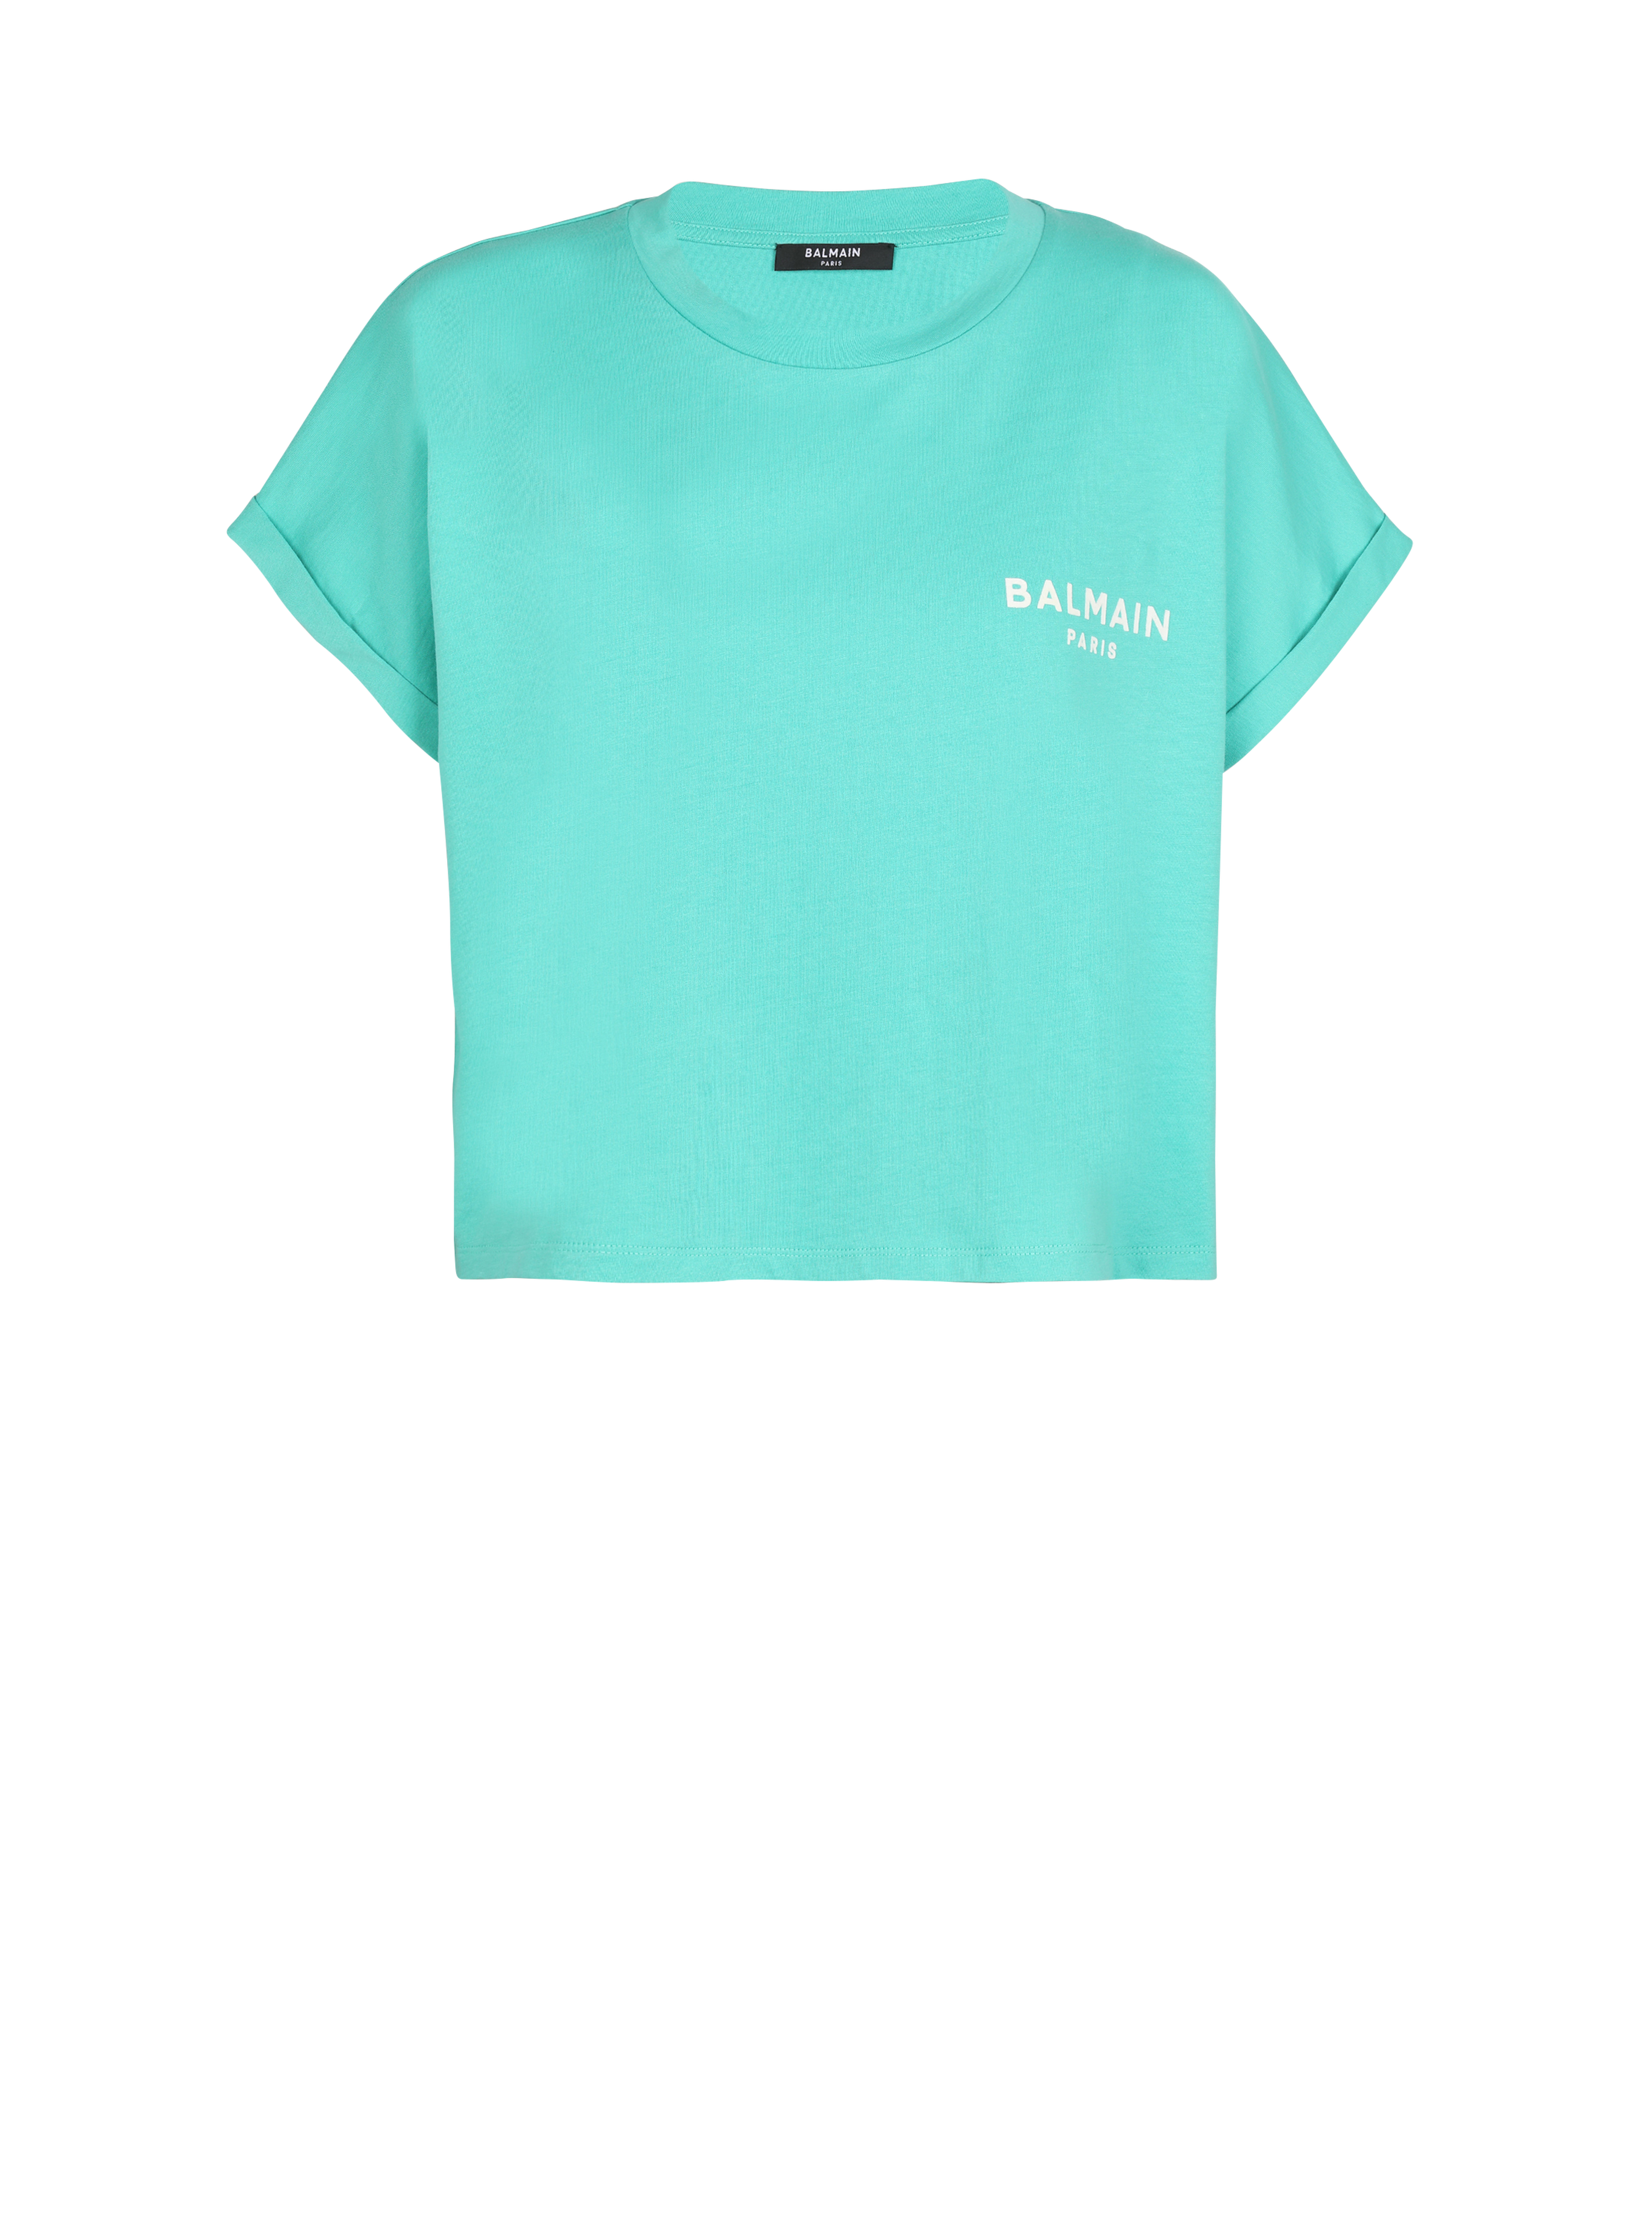 Balmain巴尔曼标志印花环保设计棉质T恤, blue